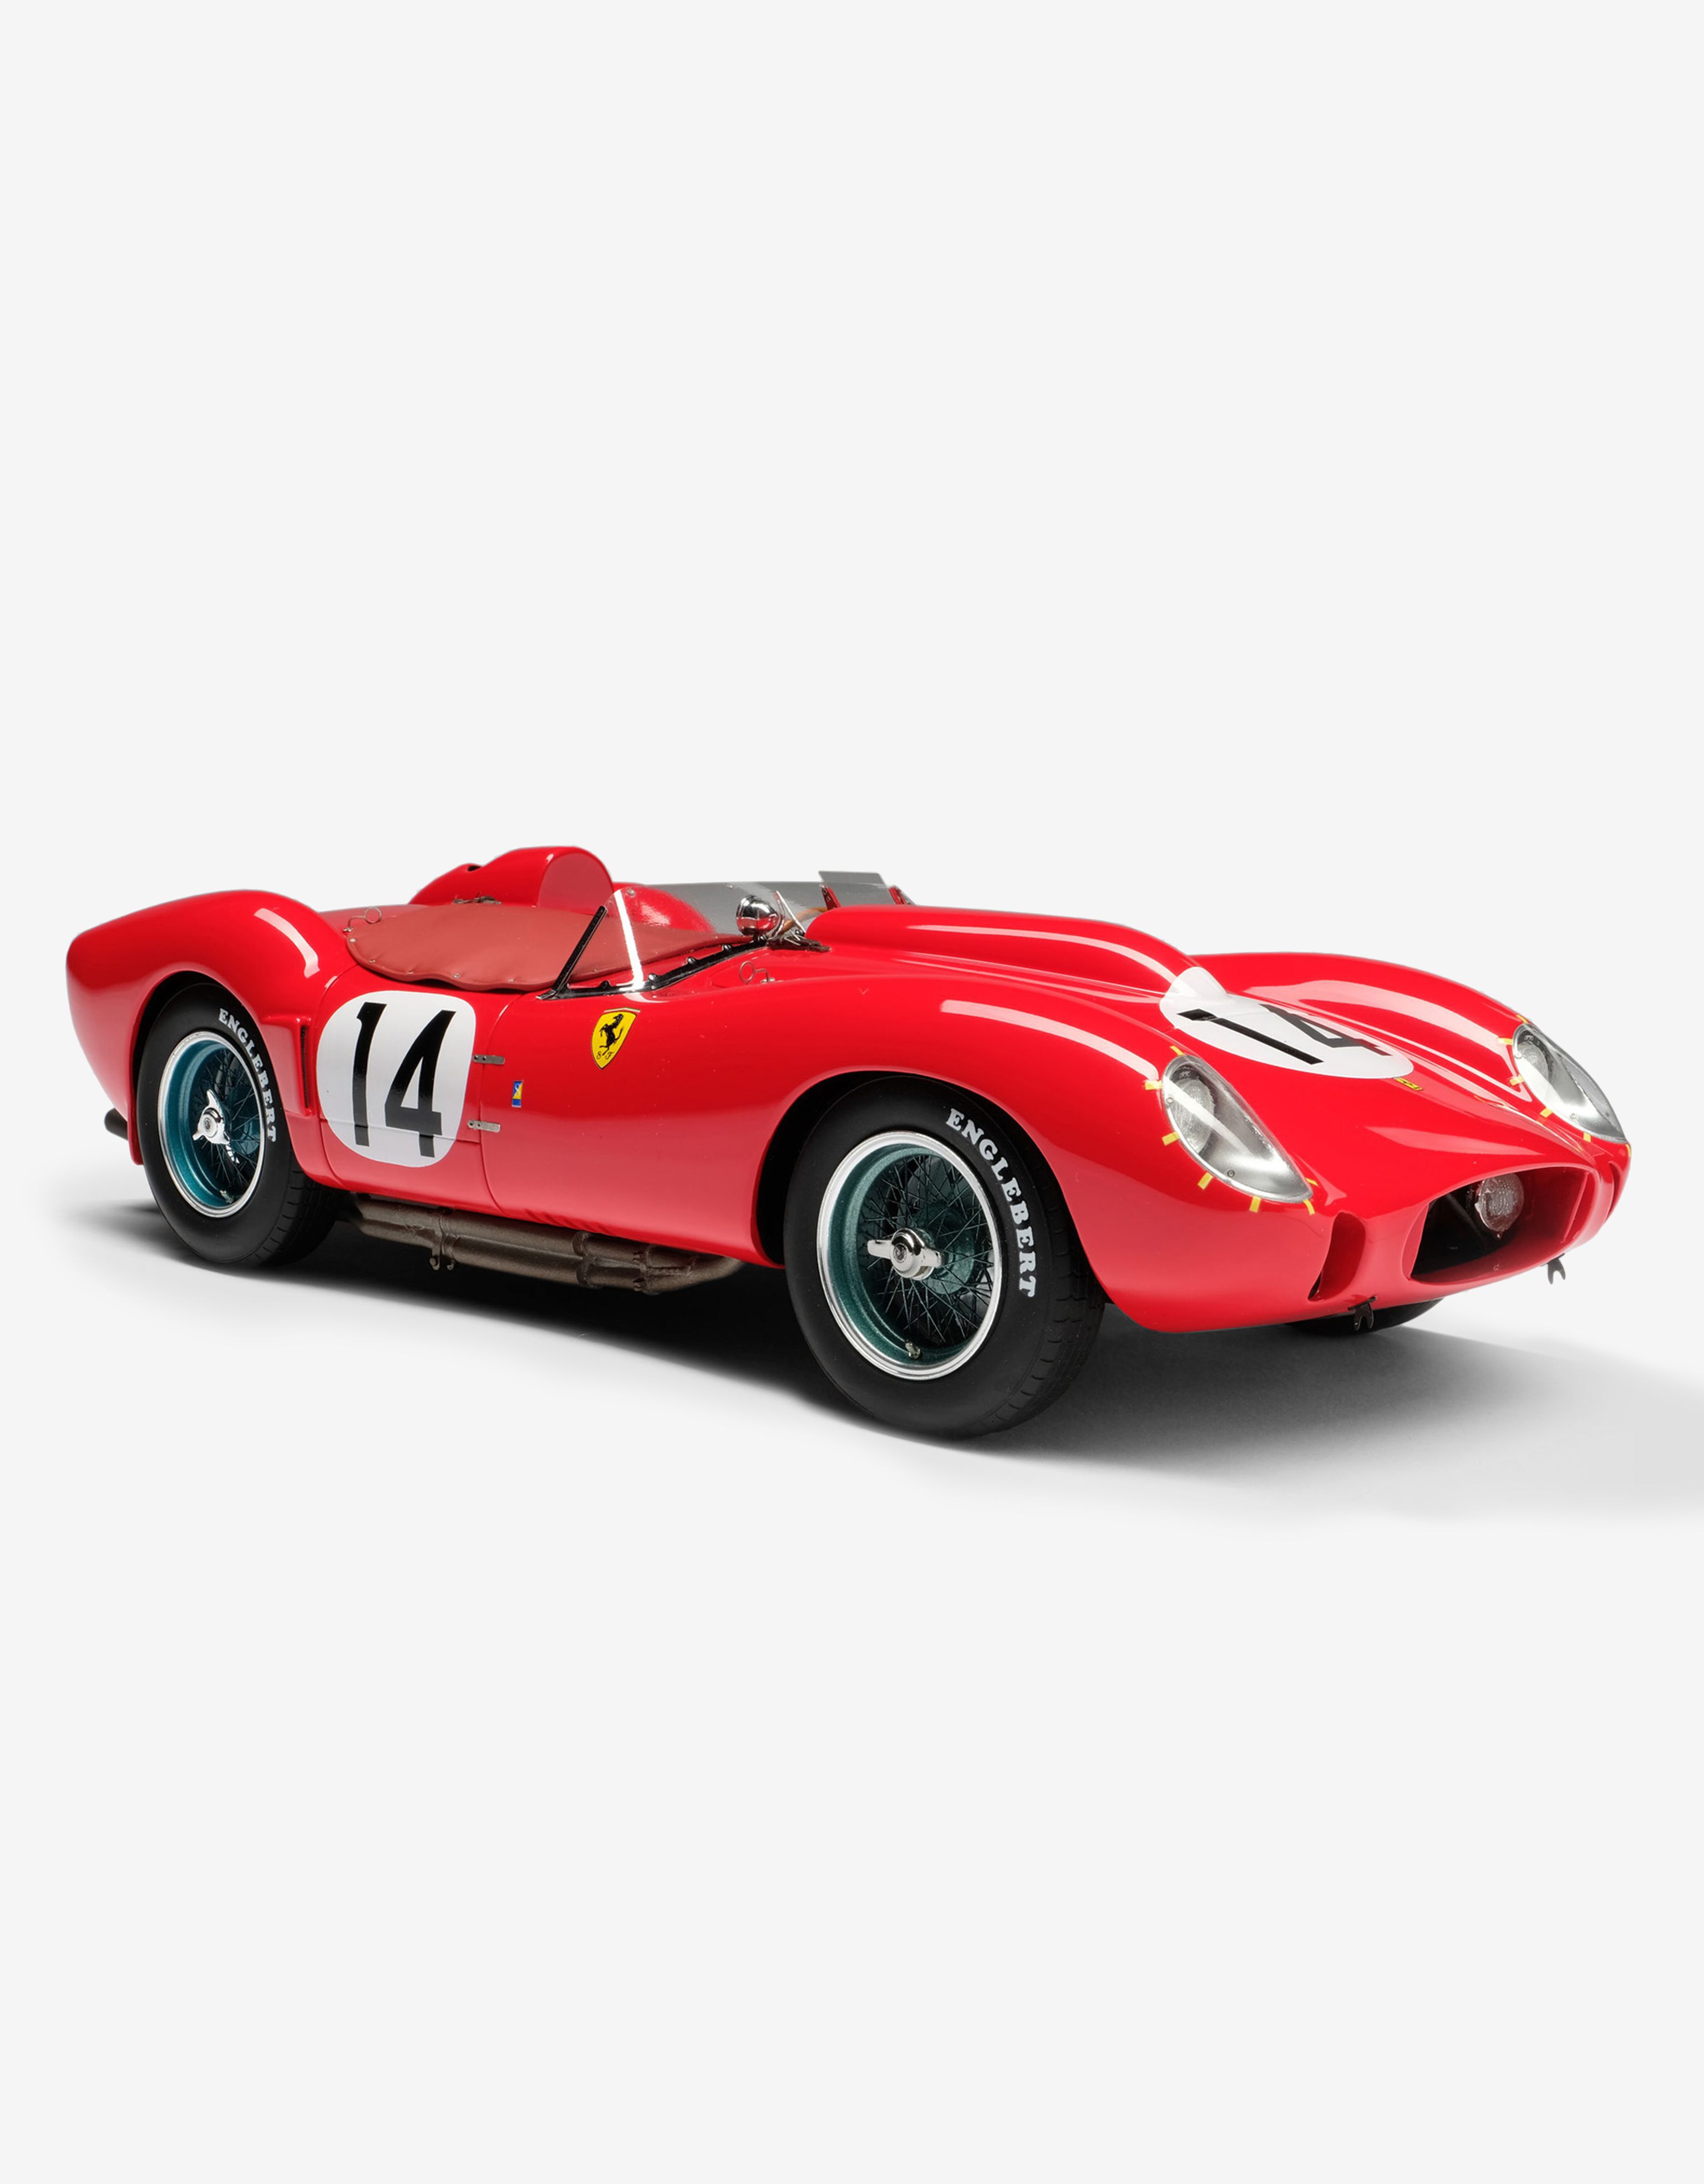 ${brand} Ferrari 250 LM 1965 Le Mans 1:18スケール モデルカー ${colorDescription} ${masterID}